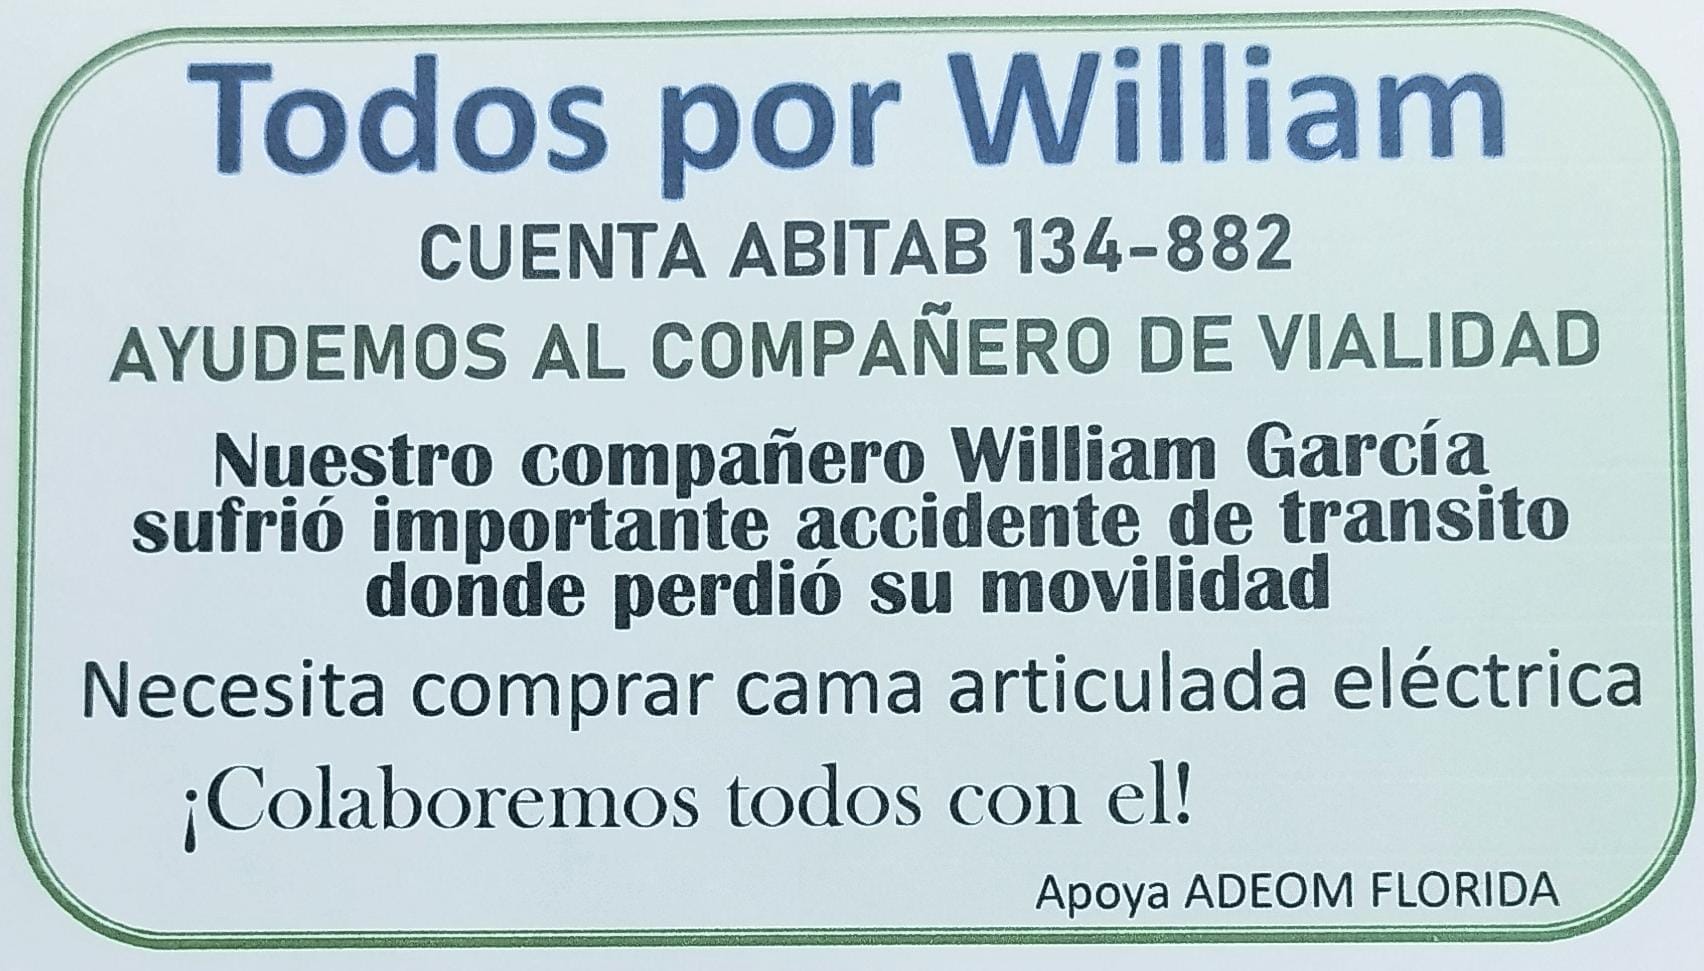 Todos por William